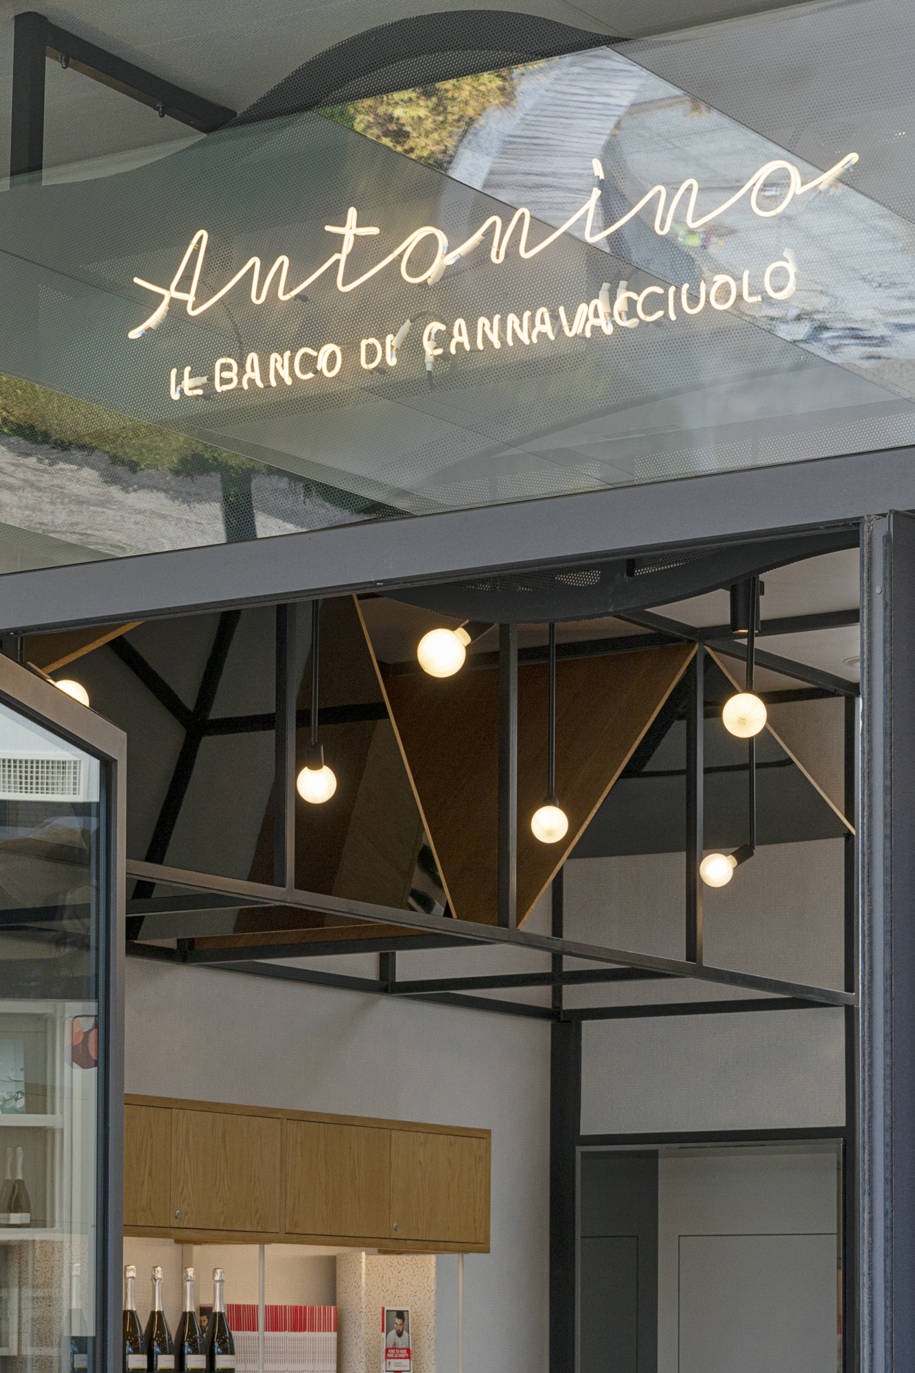 Antonino – Il banco di Cannavacciuolo, lamatilde studio, street food, Vicolungo outlet, Novara, Italy